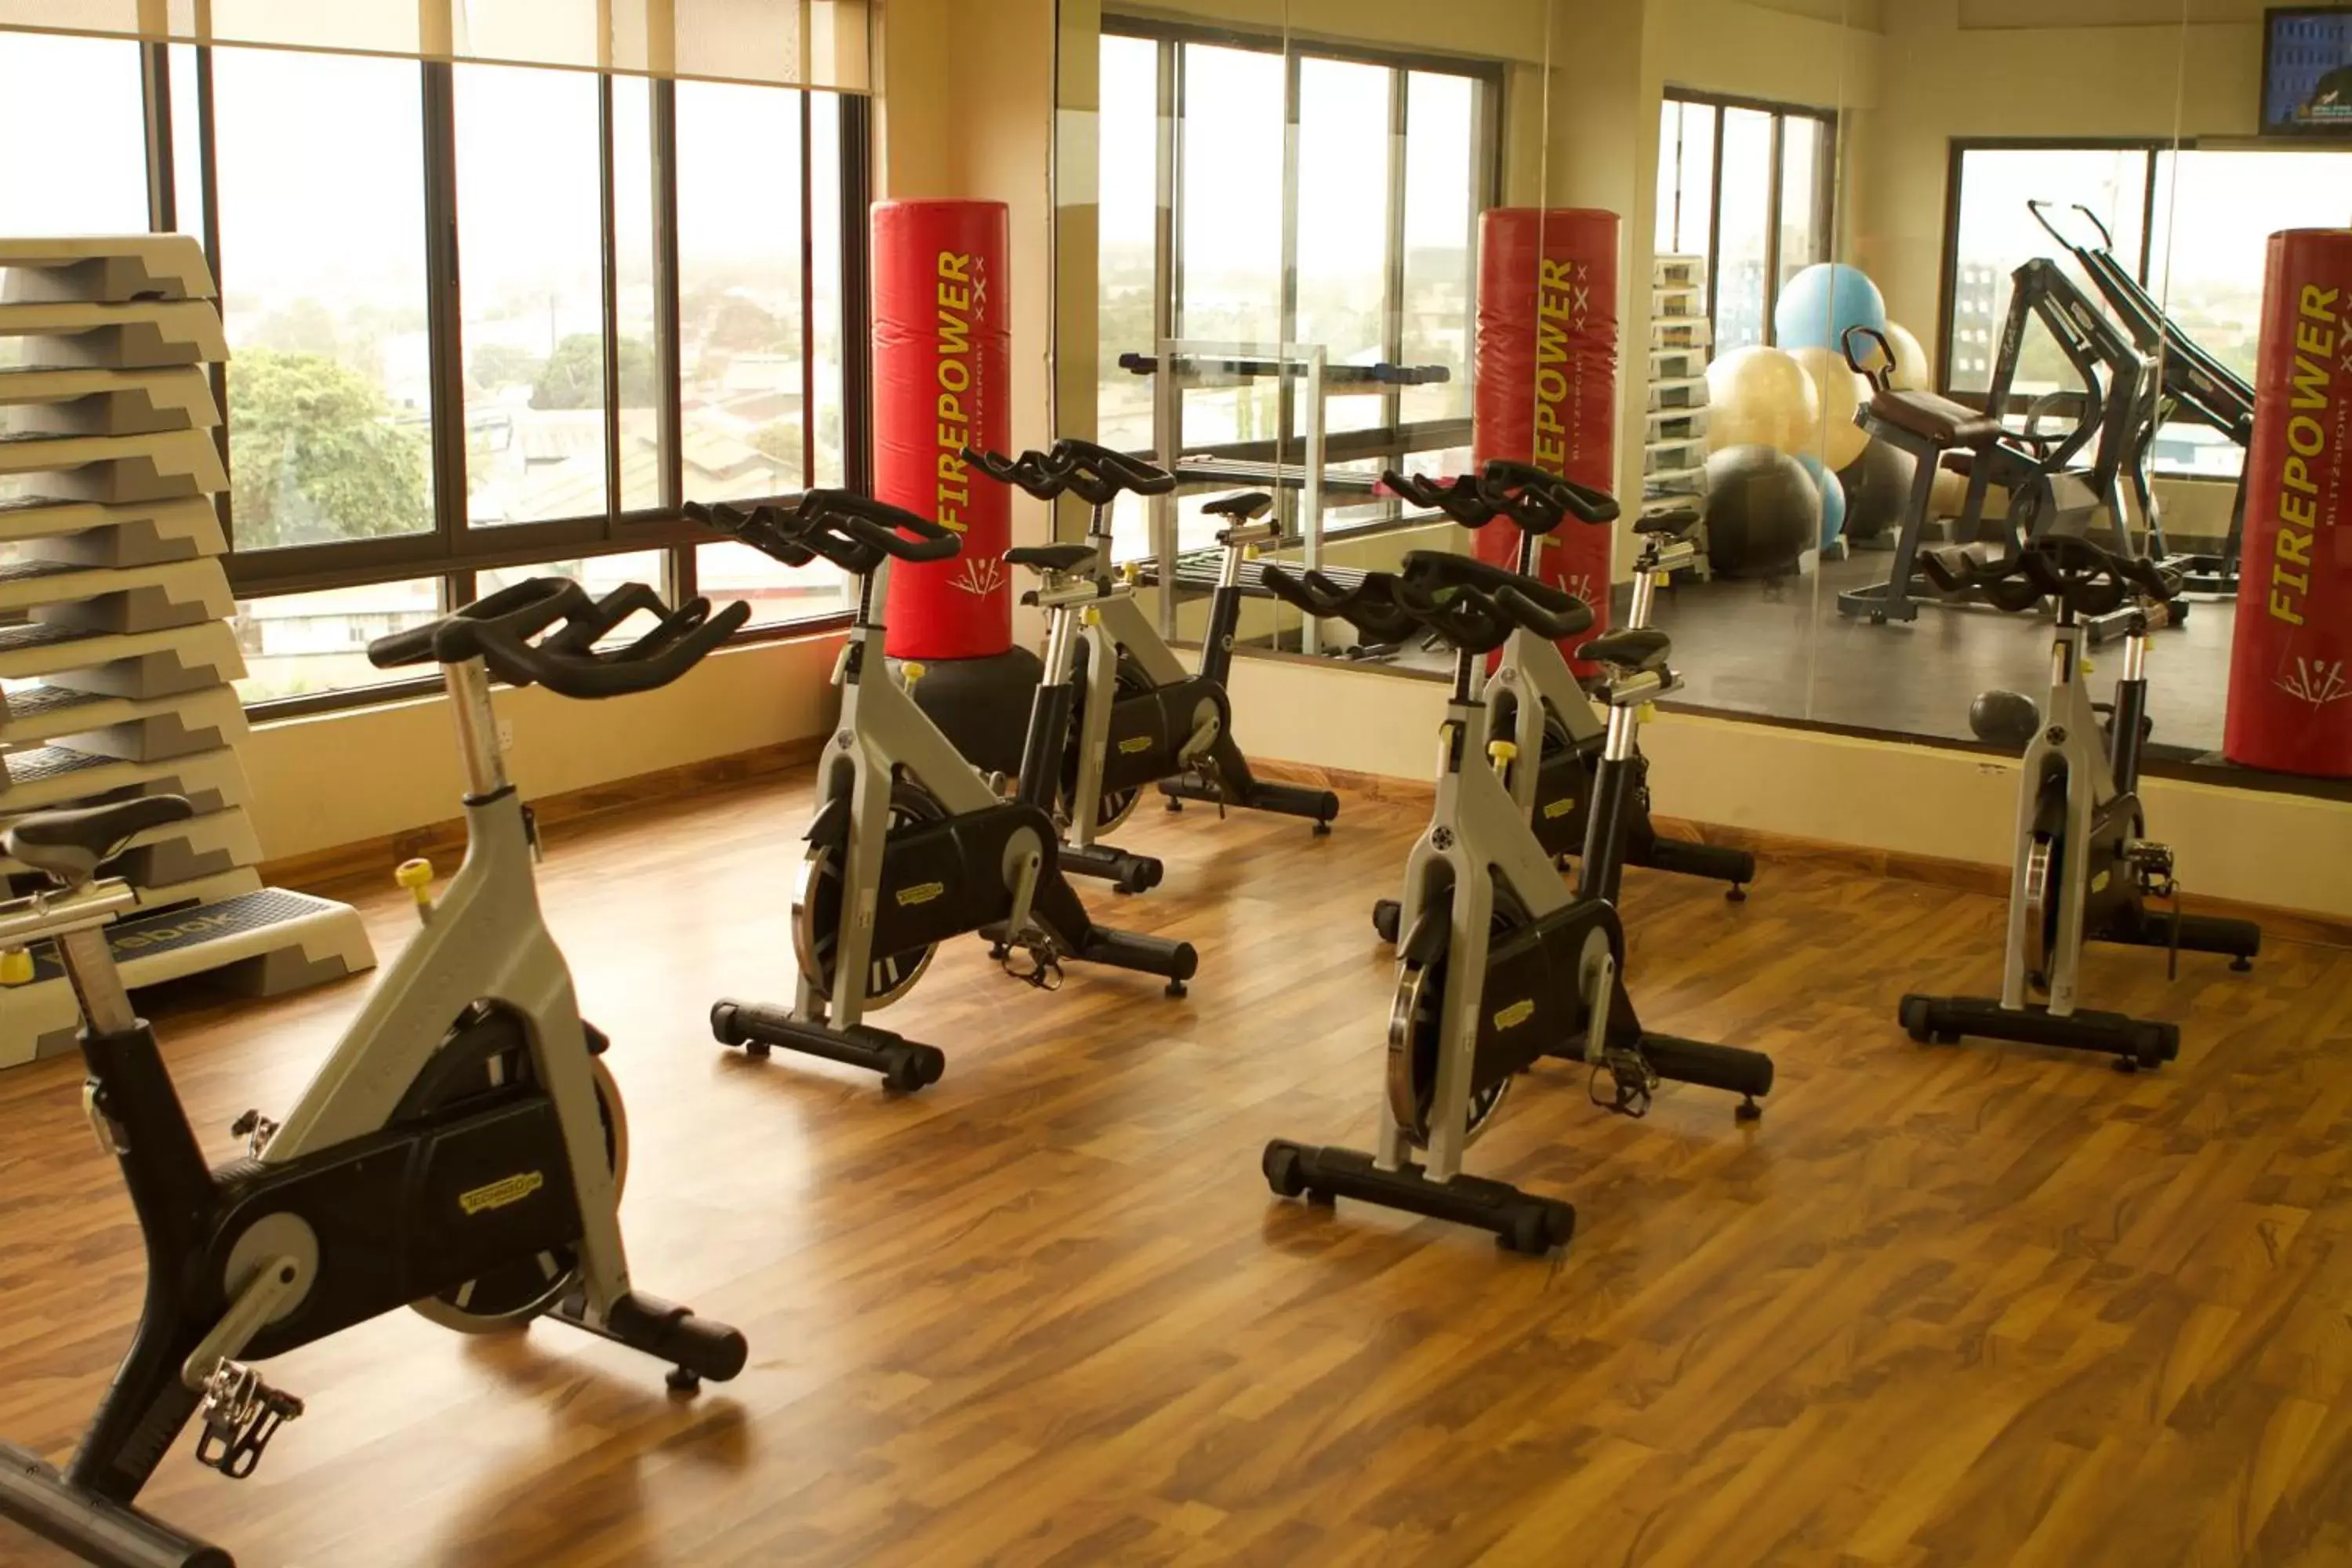 Fitness centre/facilities, Fitness Center/Facilities in CBD Hotel